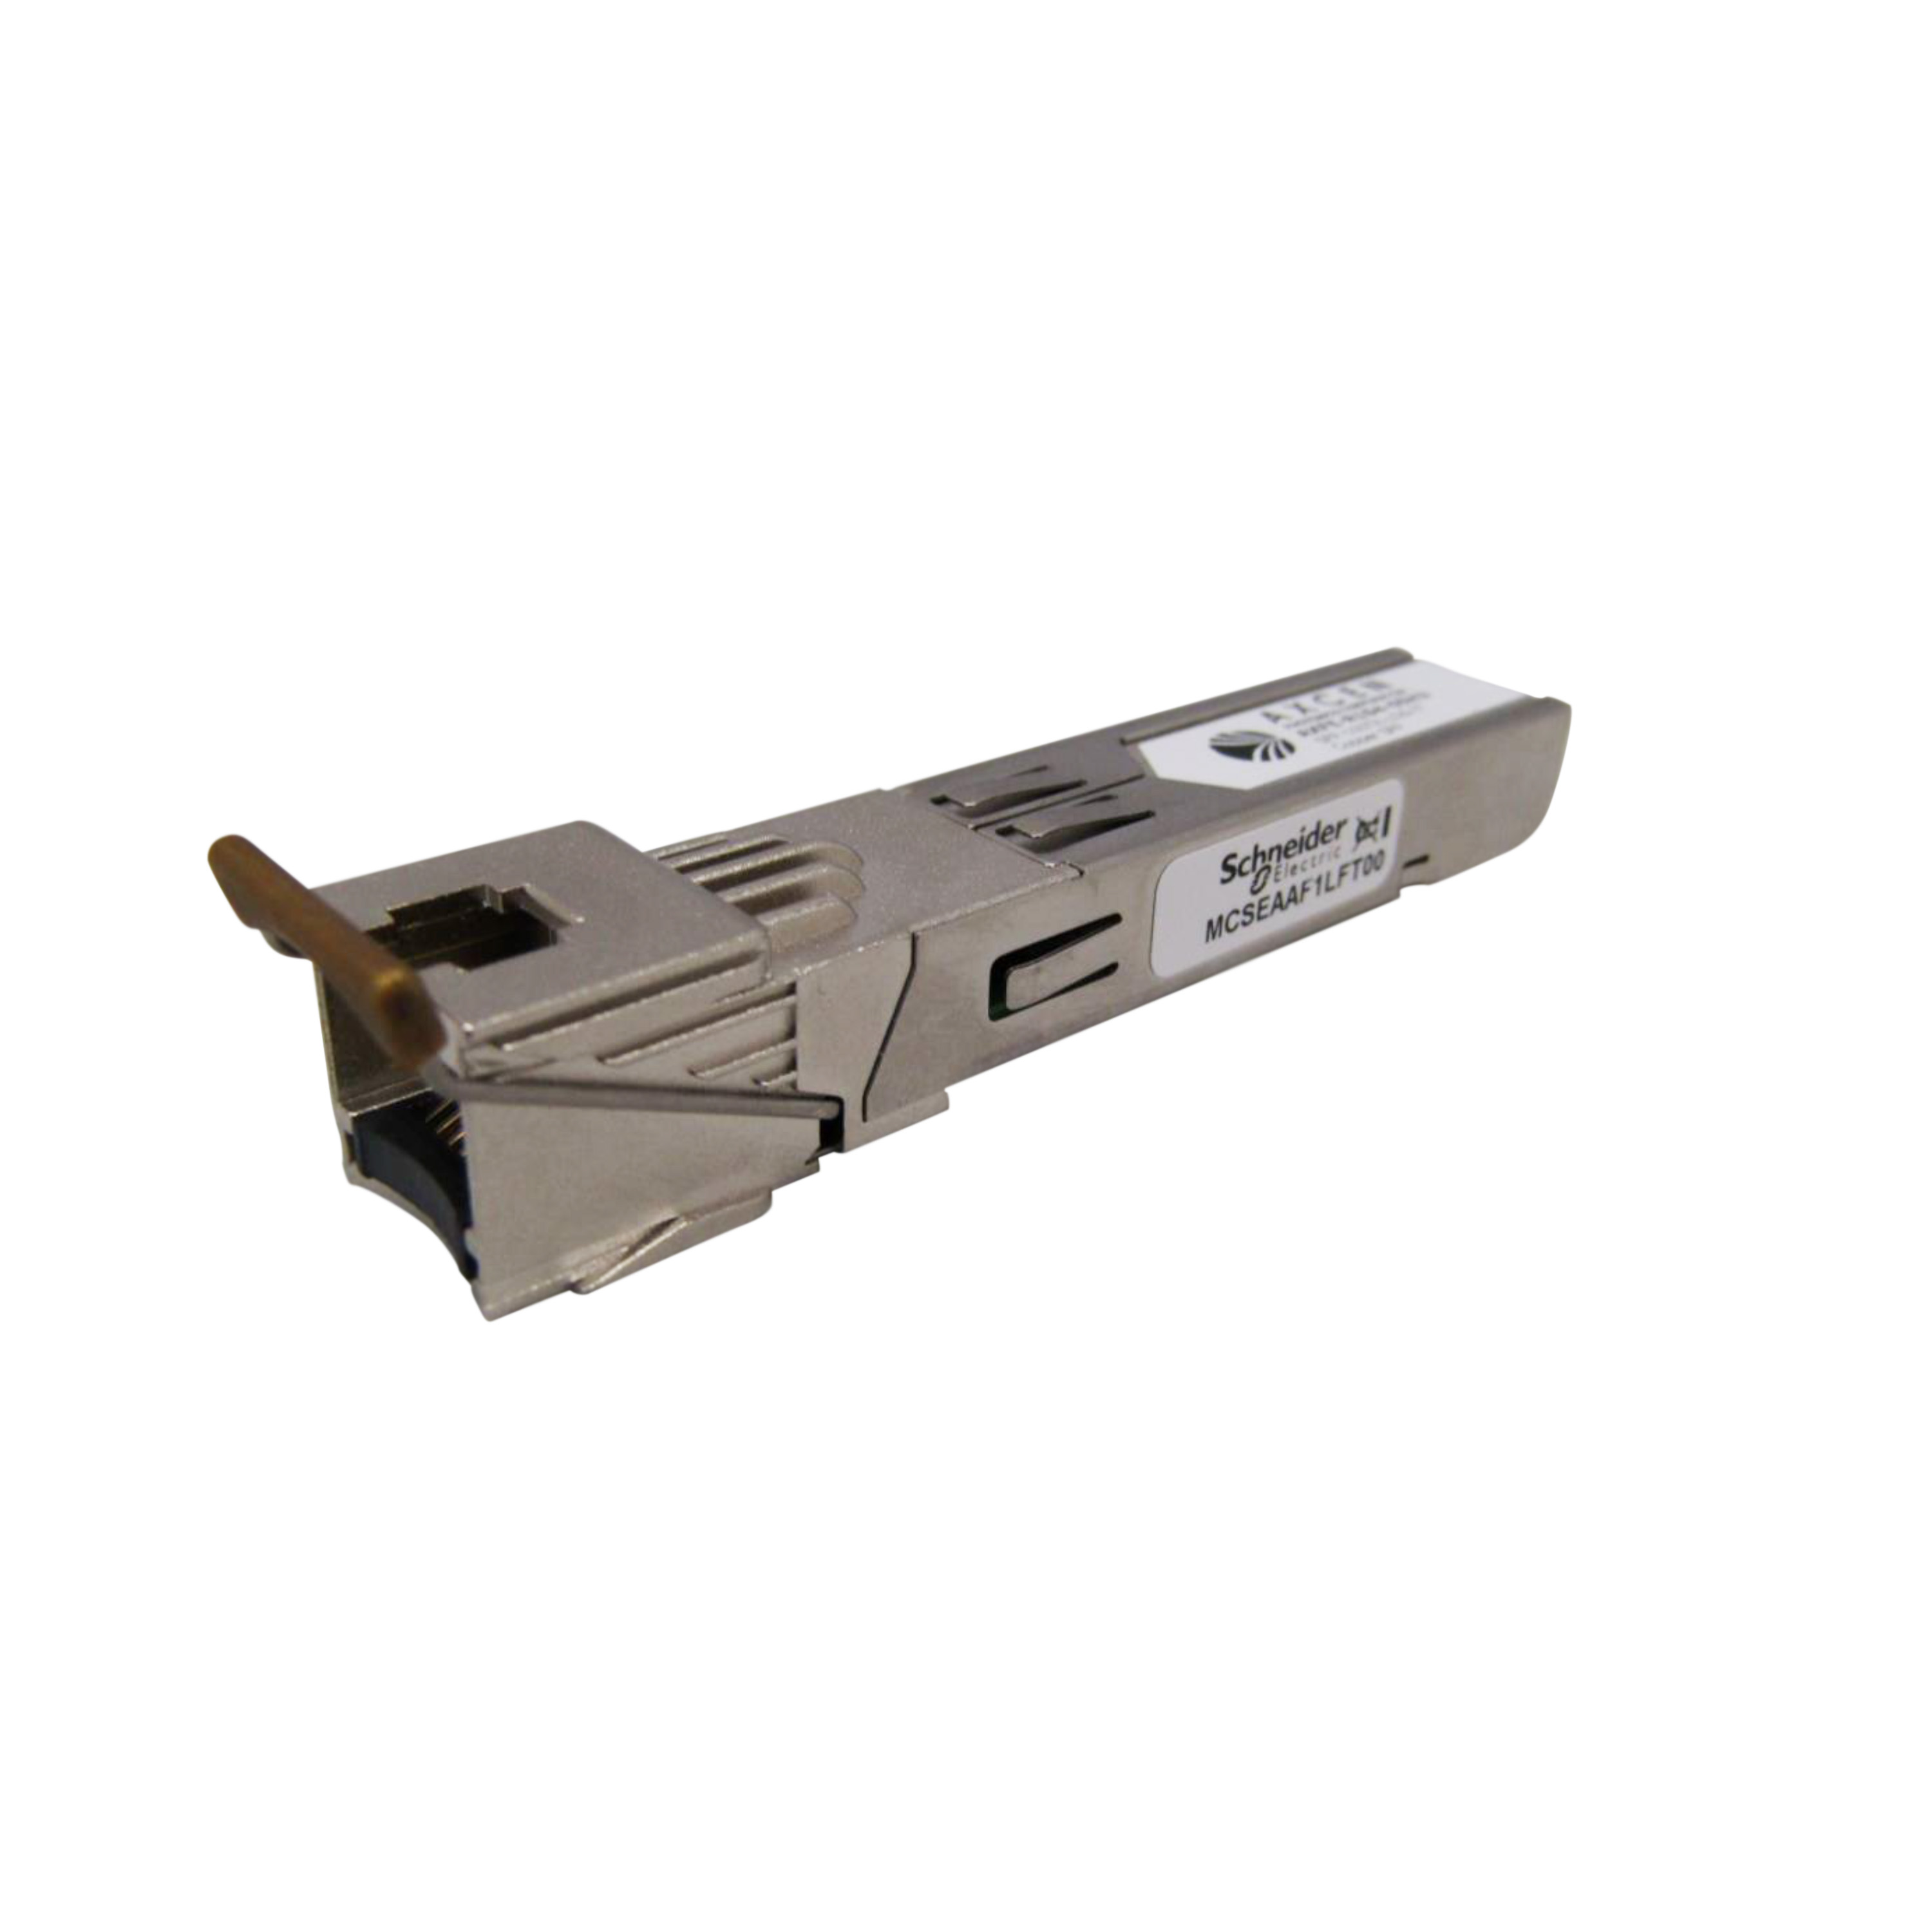 Fiber optic adaptor for Ethernet Switch - 10/100 BASE - TX/RJ45